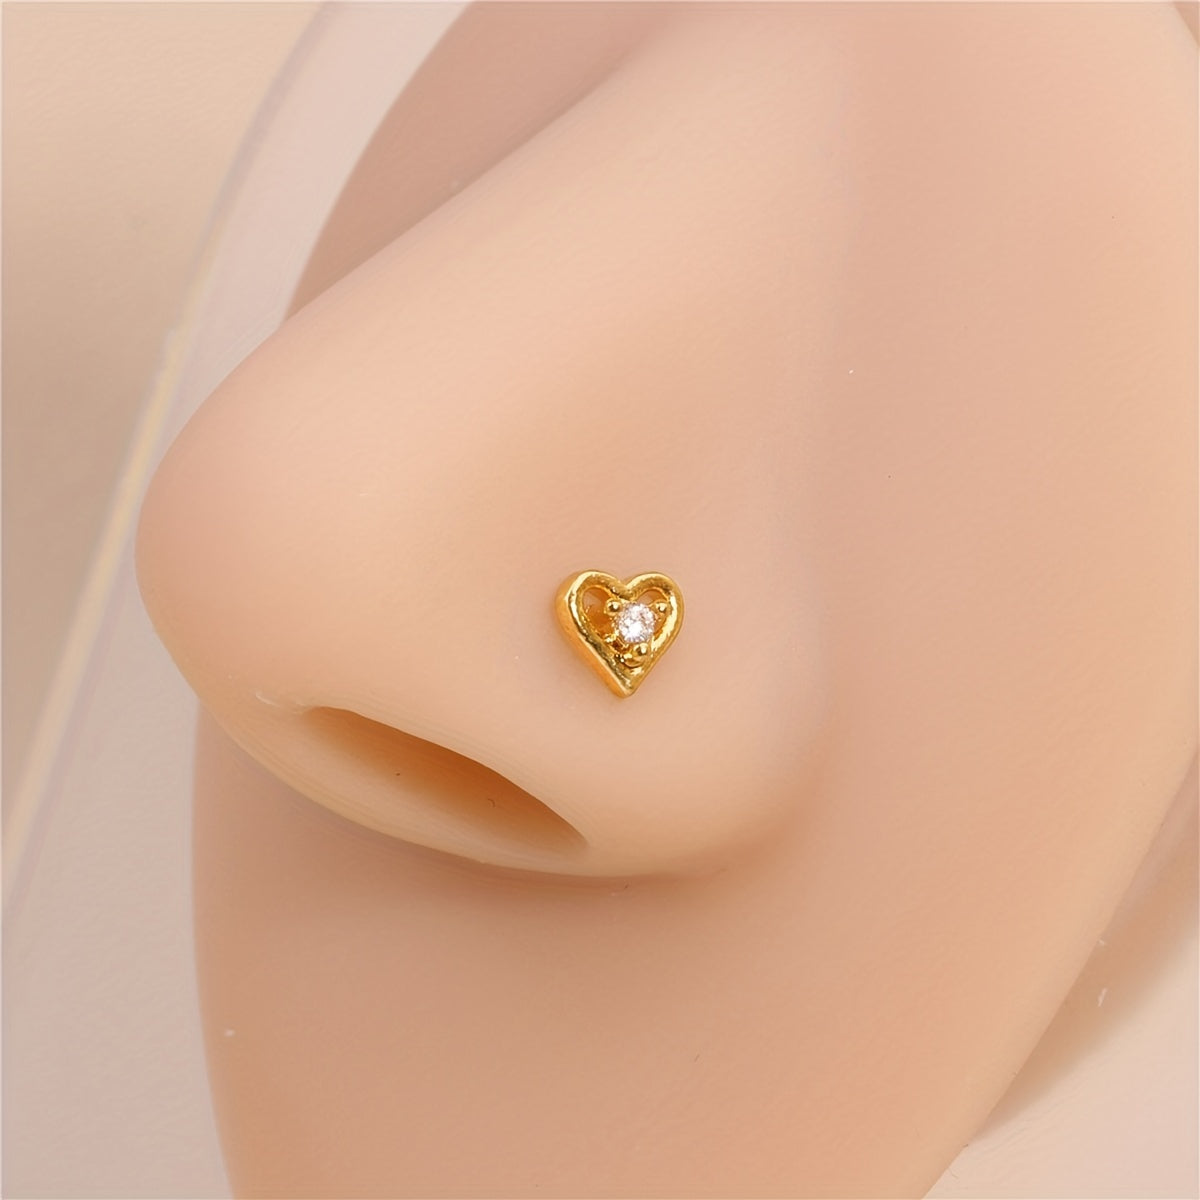 L Shaped Nose Ring Stud For Women Men CZ Love Heart Body Piercing Jewelry